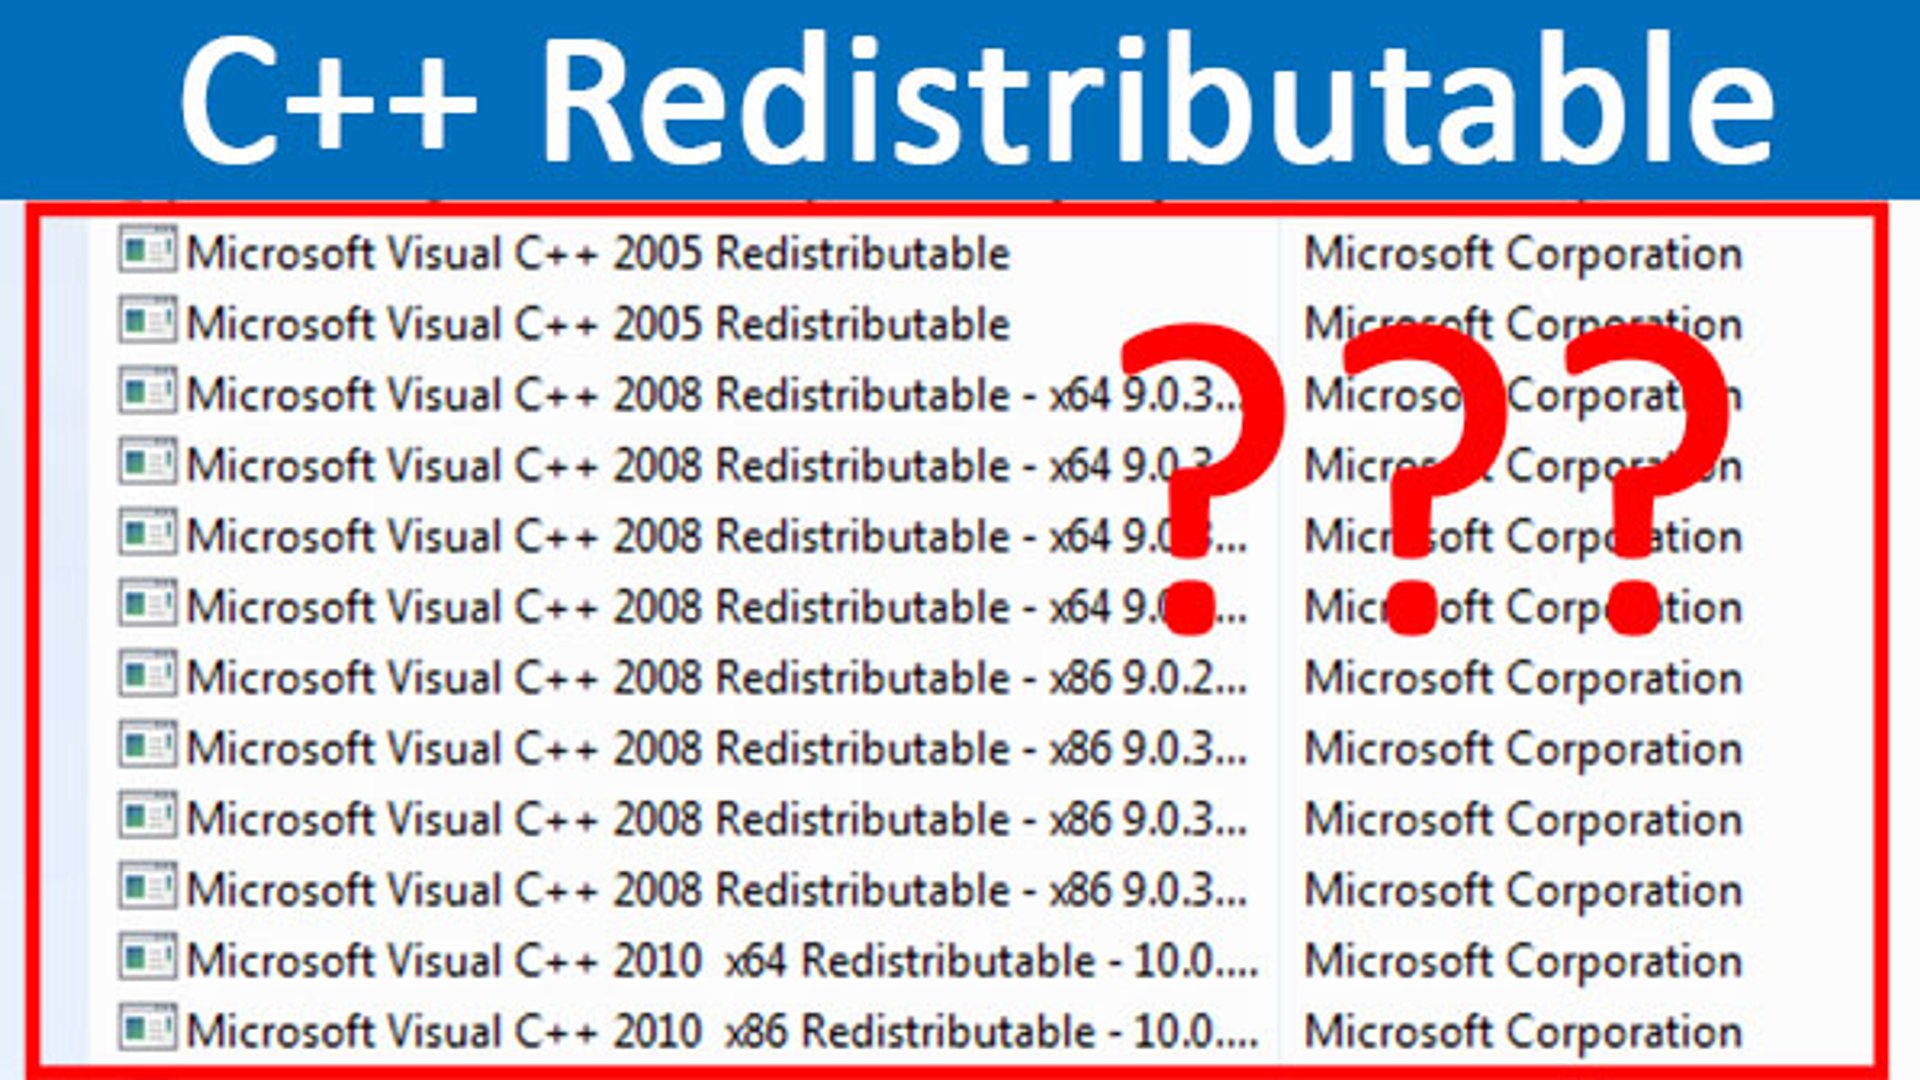 Microsoft Visual c++ 2012 Redistributable (x86) - 11.0.61030. C++ Redistributable 2012. Redistributable. C 2008 redistributable package x86